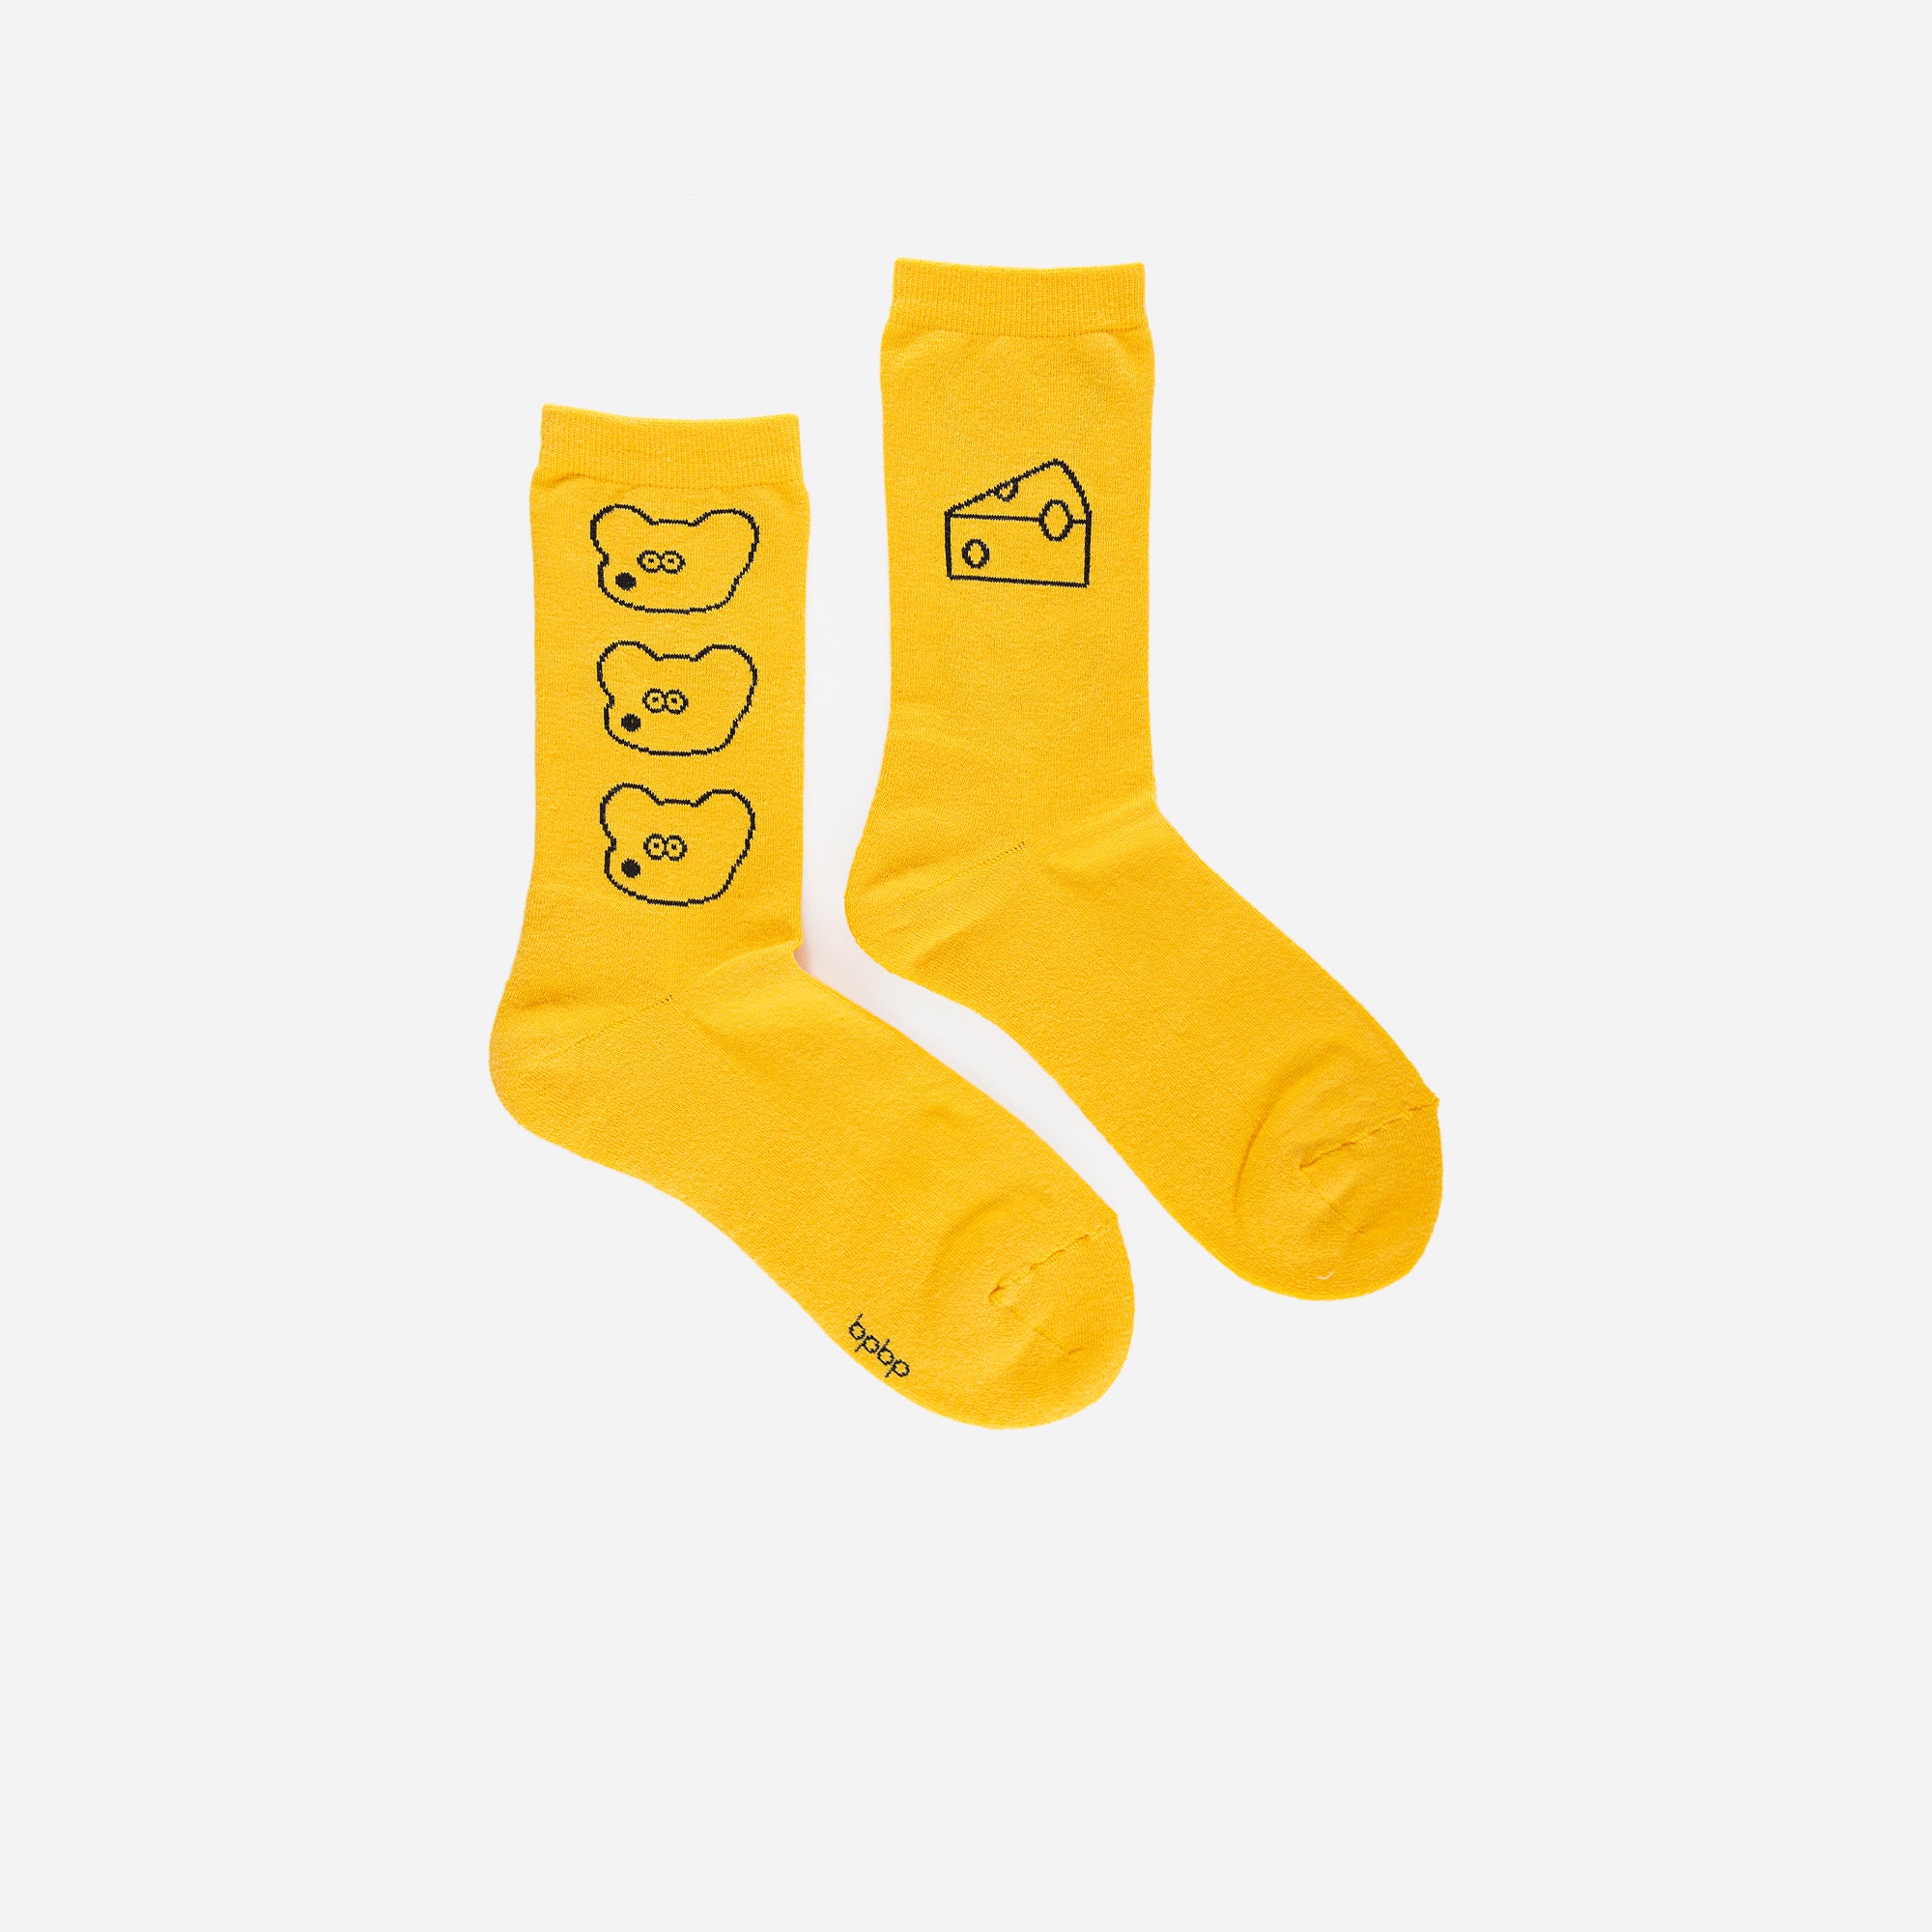 ANDY Trio Yellow Socks